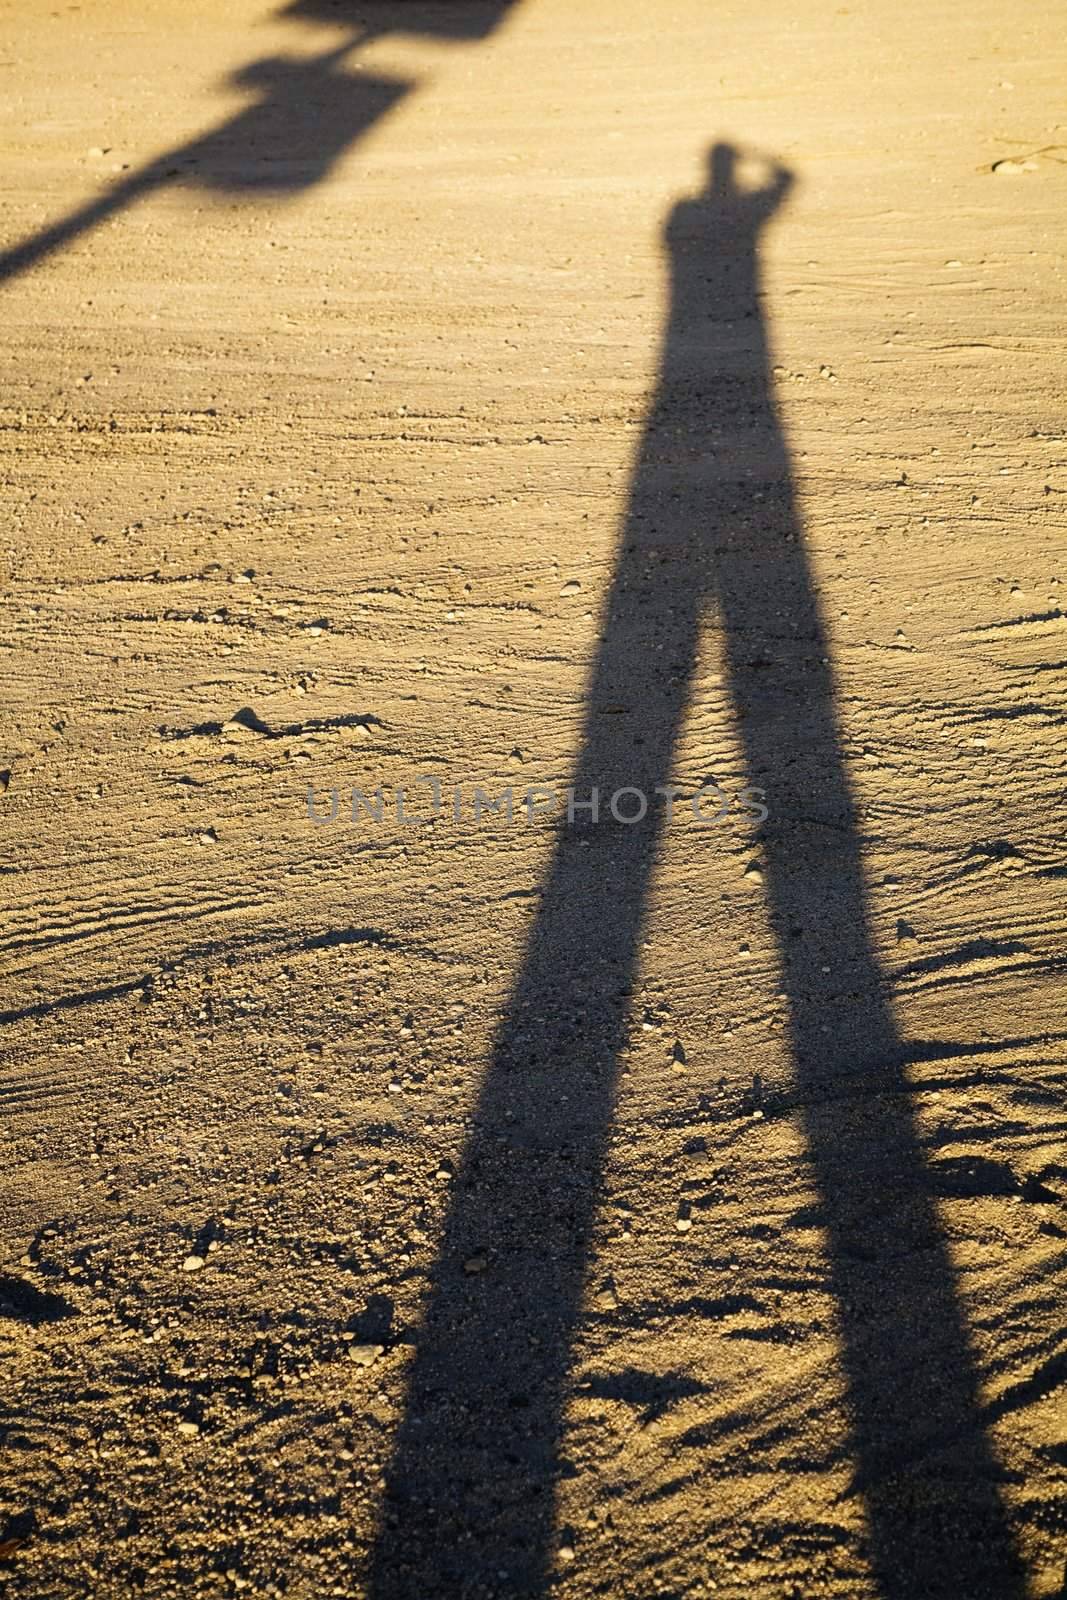 Shadow of man on dirt at sundown.